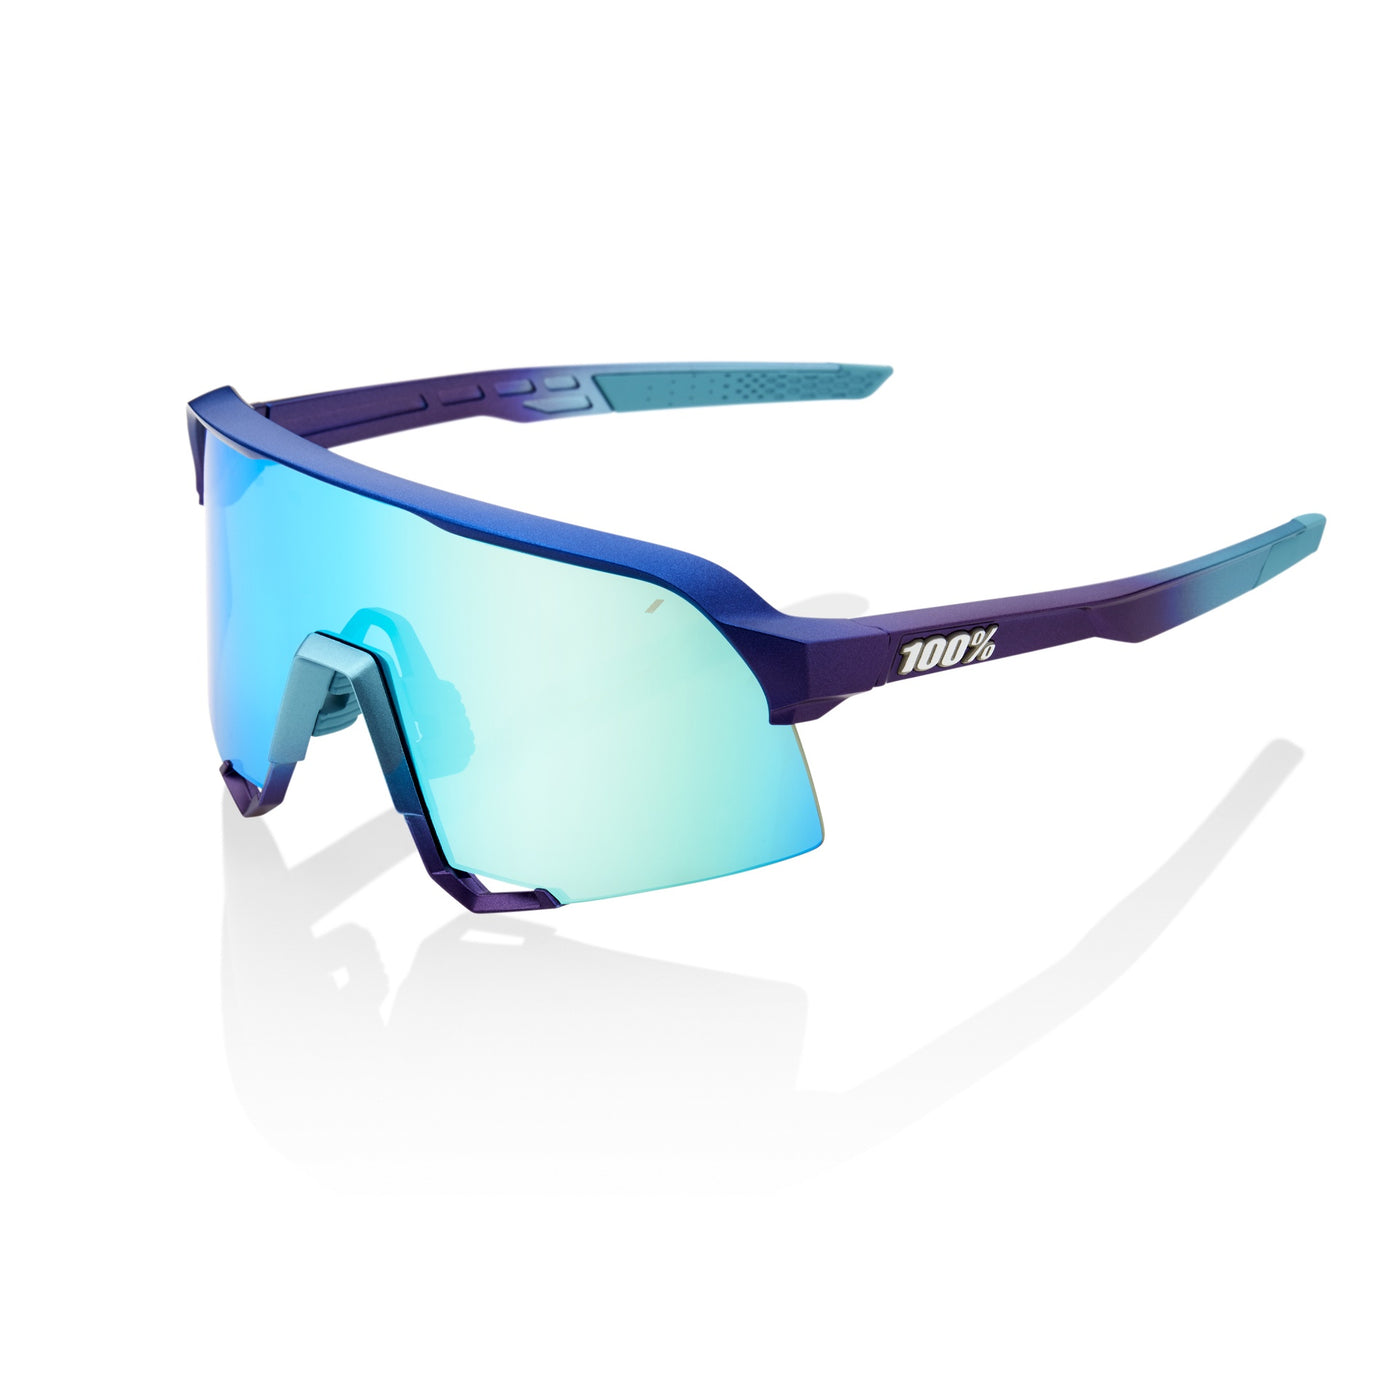 Sunglasses 100% S3 - Matte Metallic - Blue Topaz